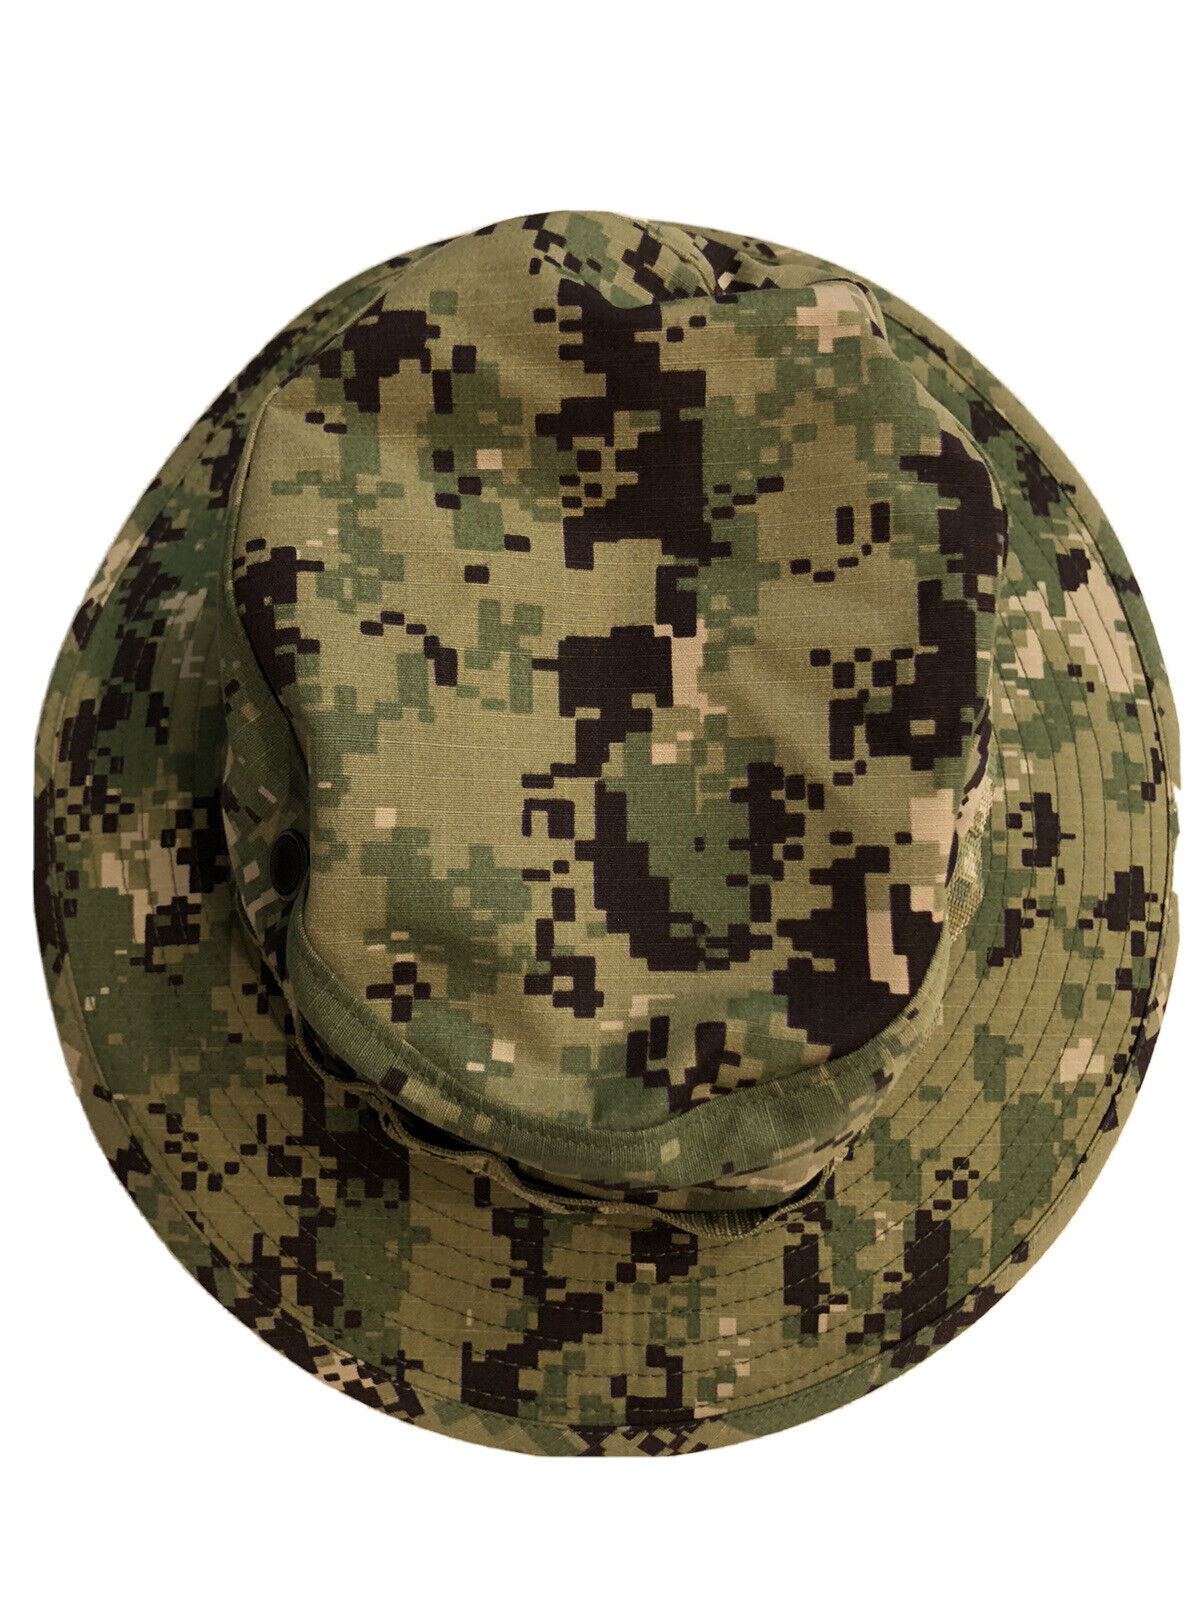 NWT NWU Type III Navy Seal AOR2 Digital Woodland Boonie Hat SUN COVER size XL